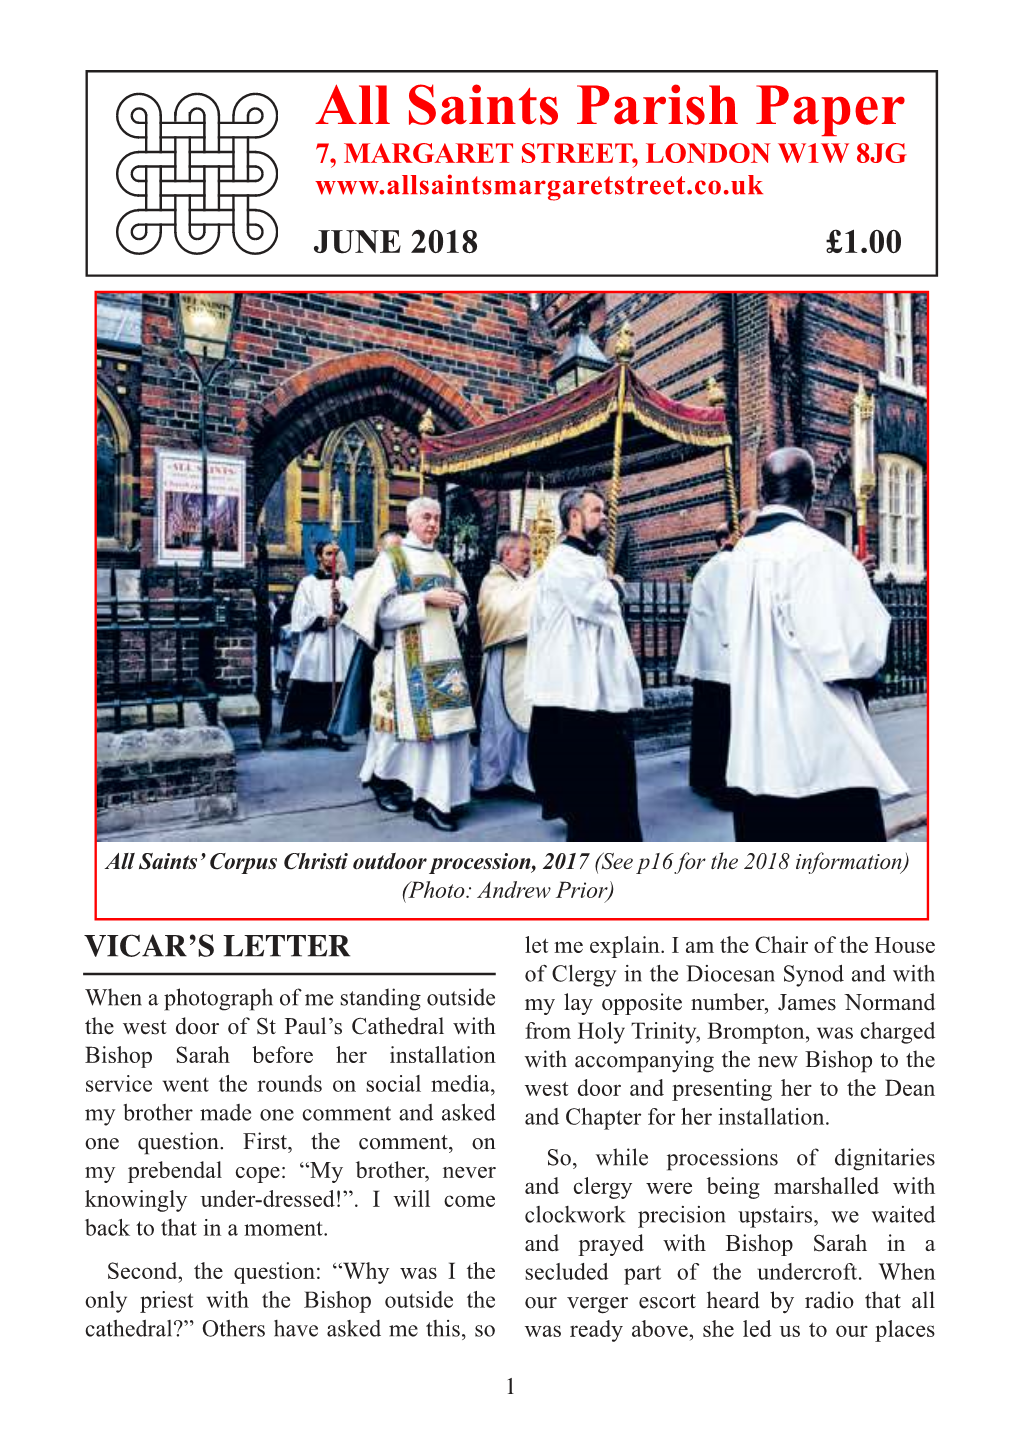 All Saints Parish Paper 7, MARGARET STREET, LONDON W1W 8JG JUNE 2018 £1.00